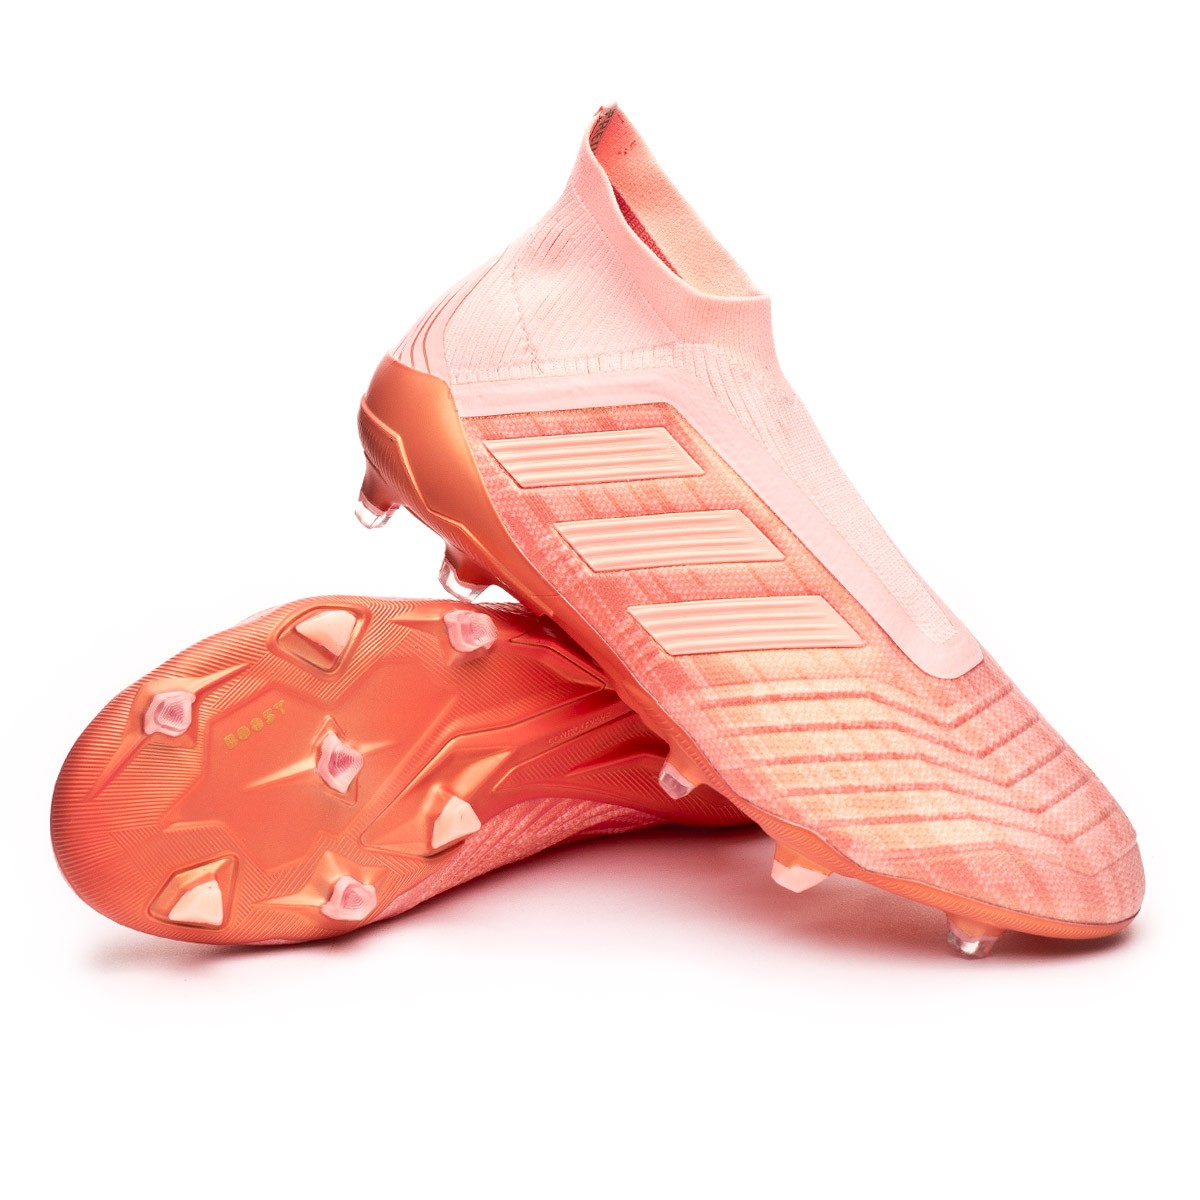 light pink adidas football boots